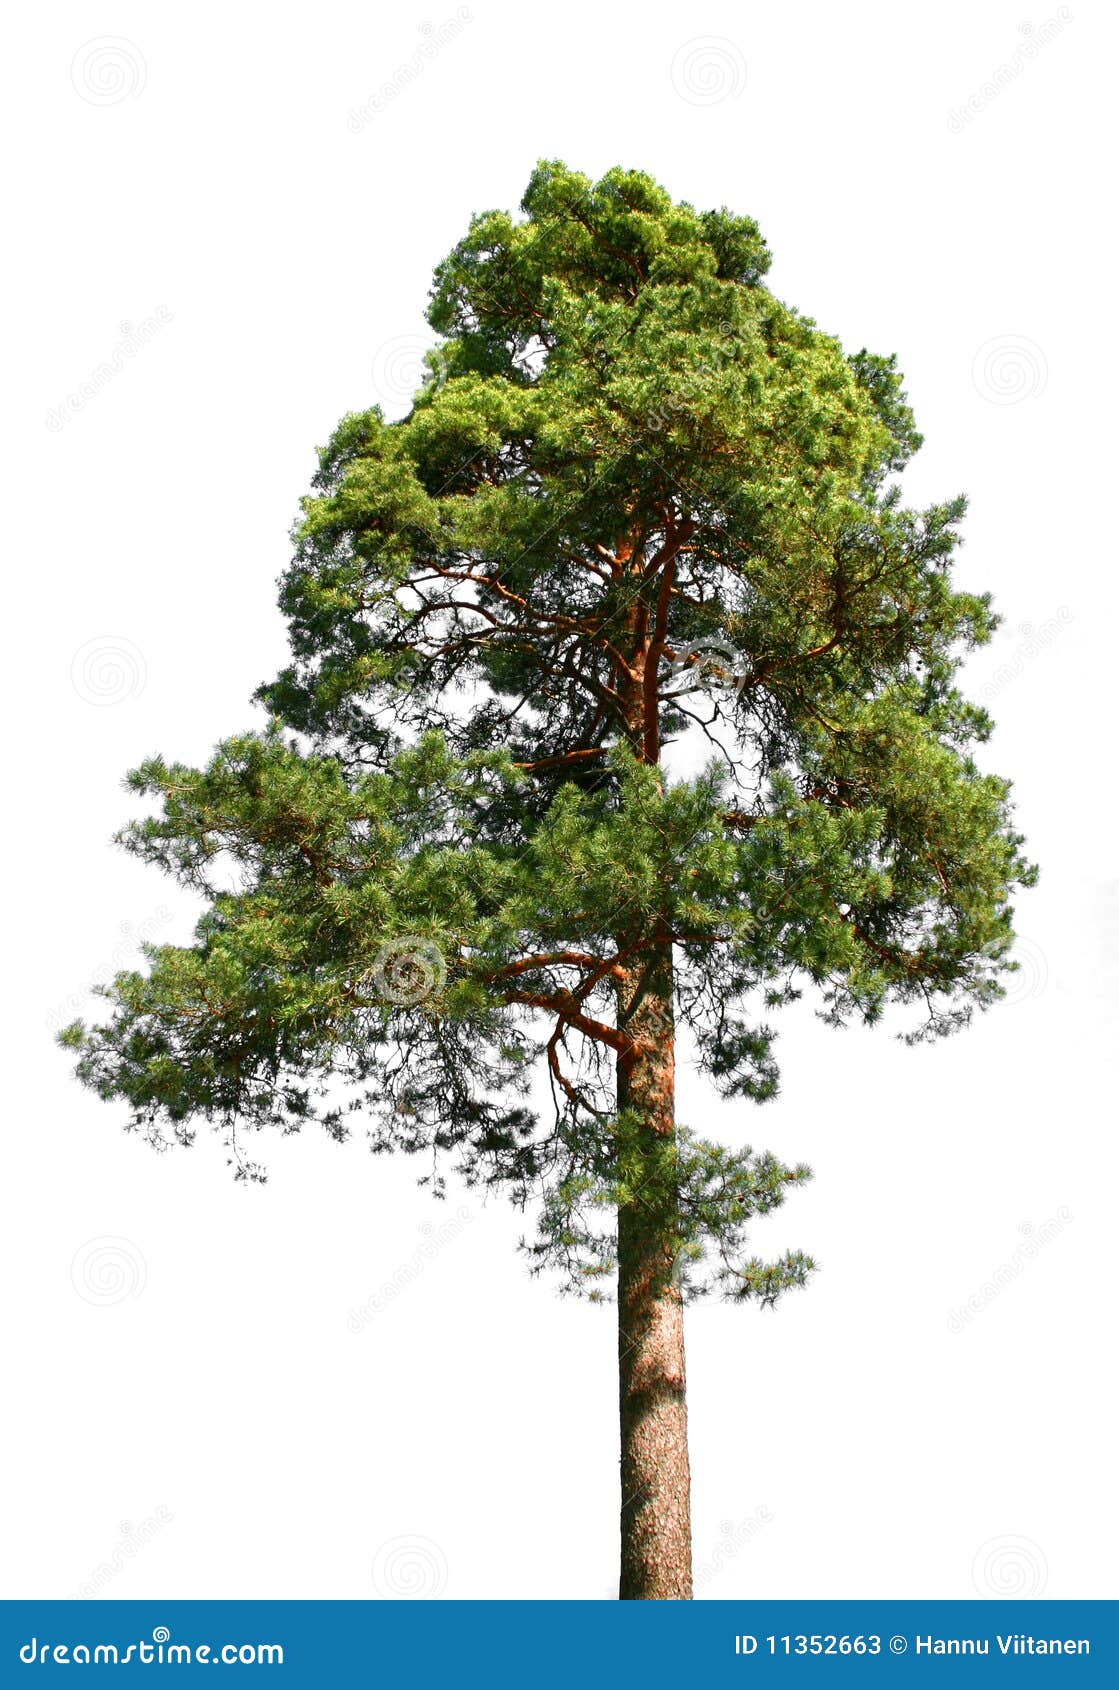 lone pine tree on white